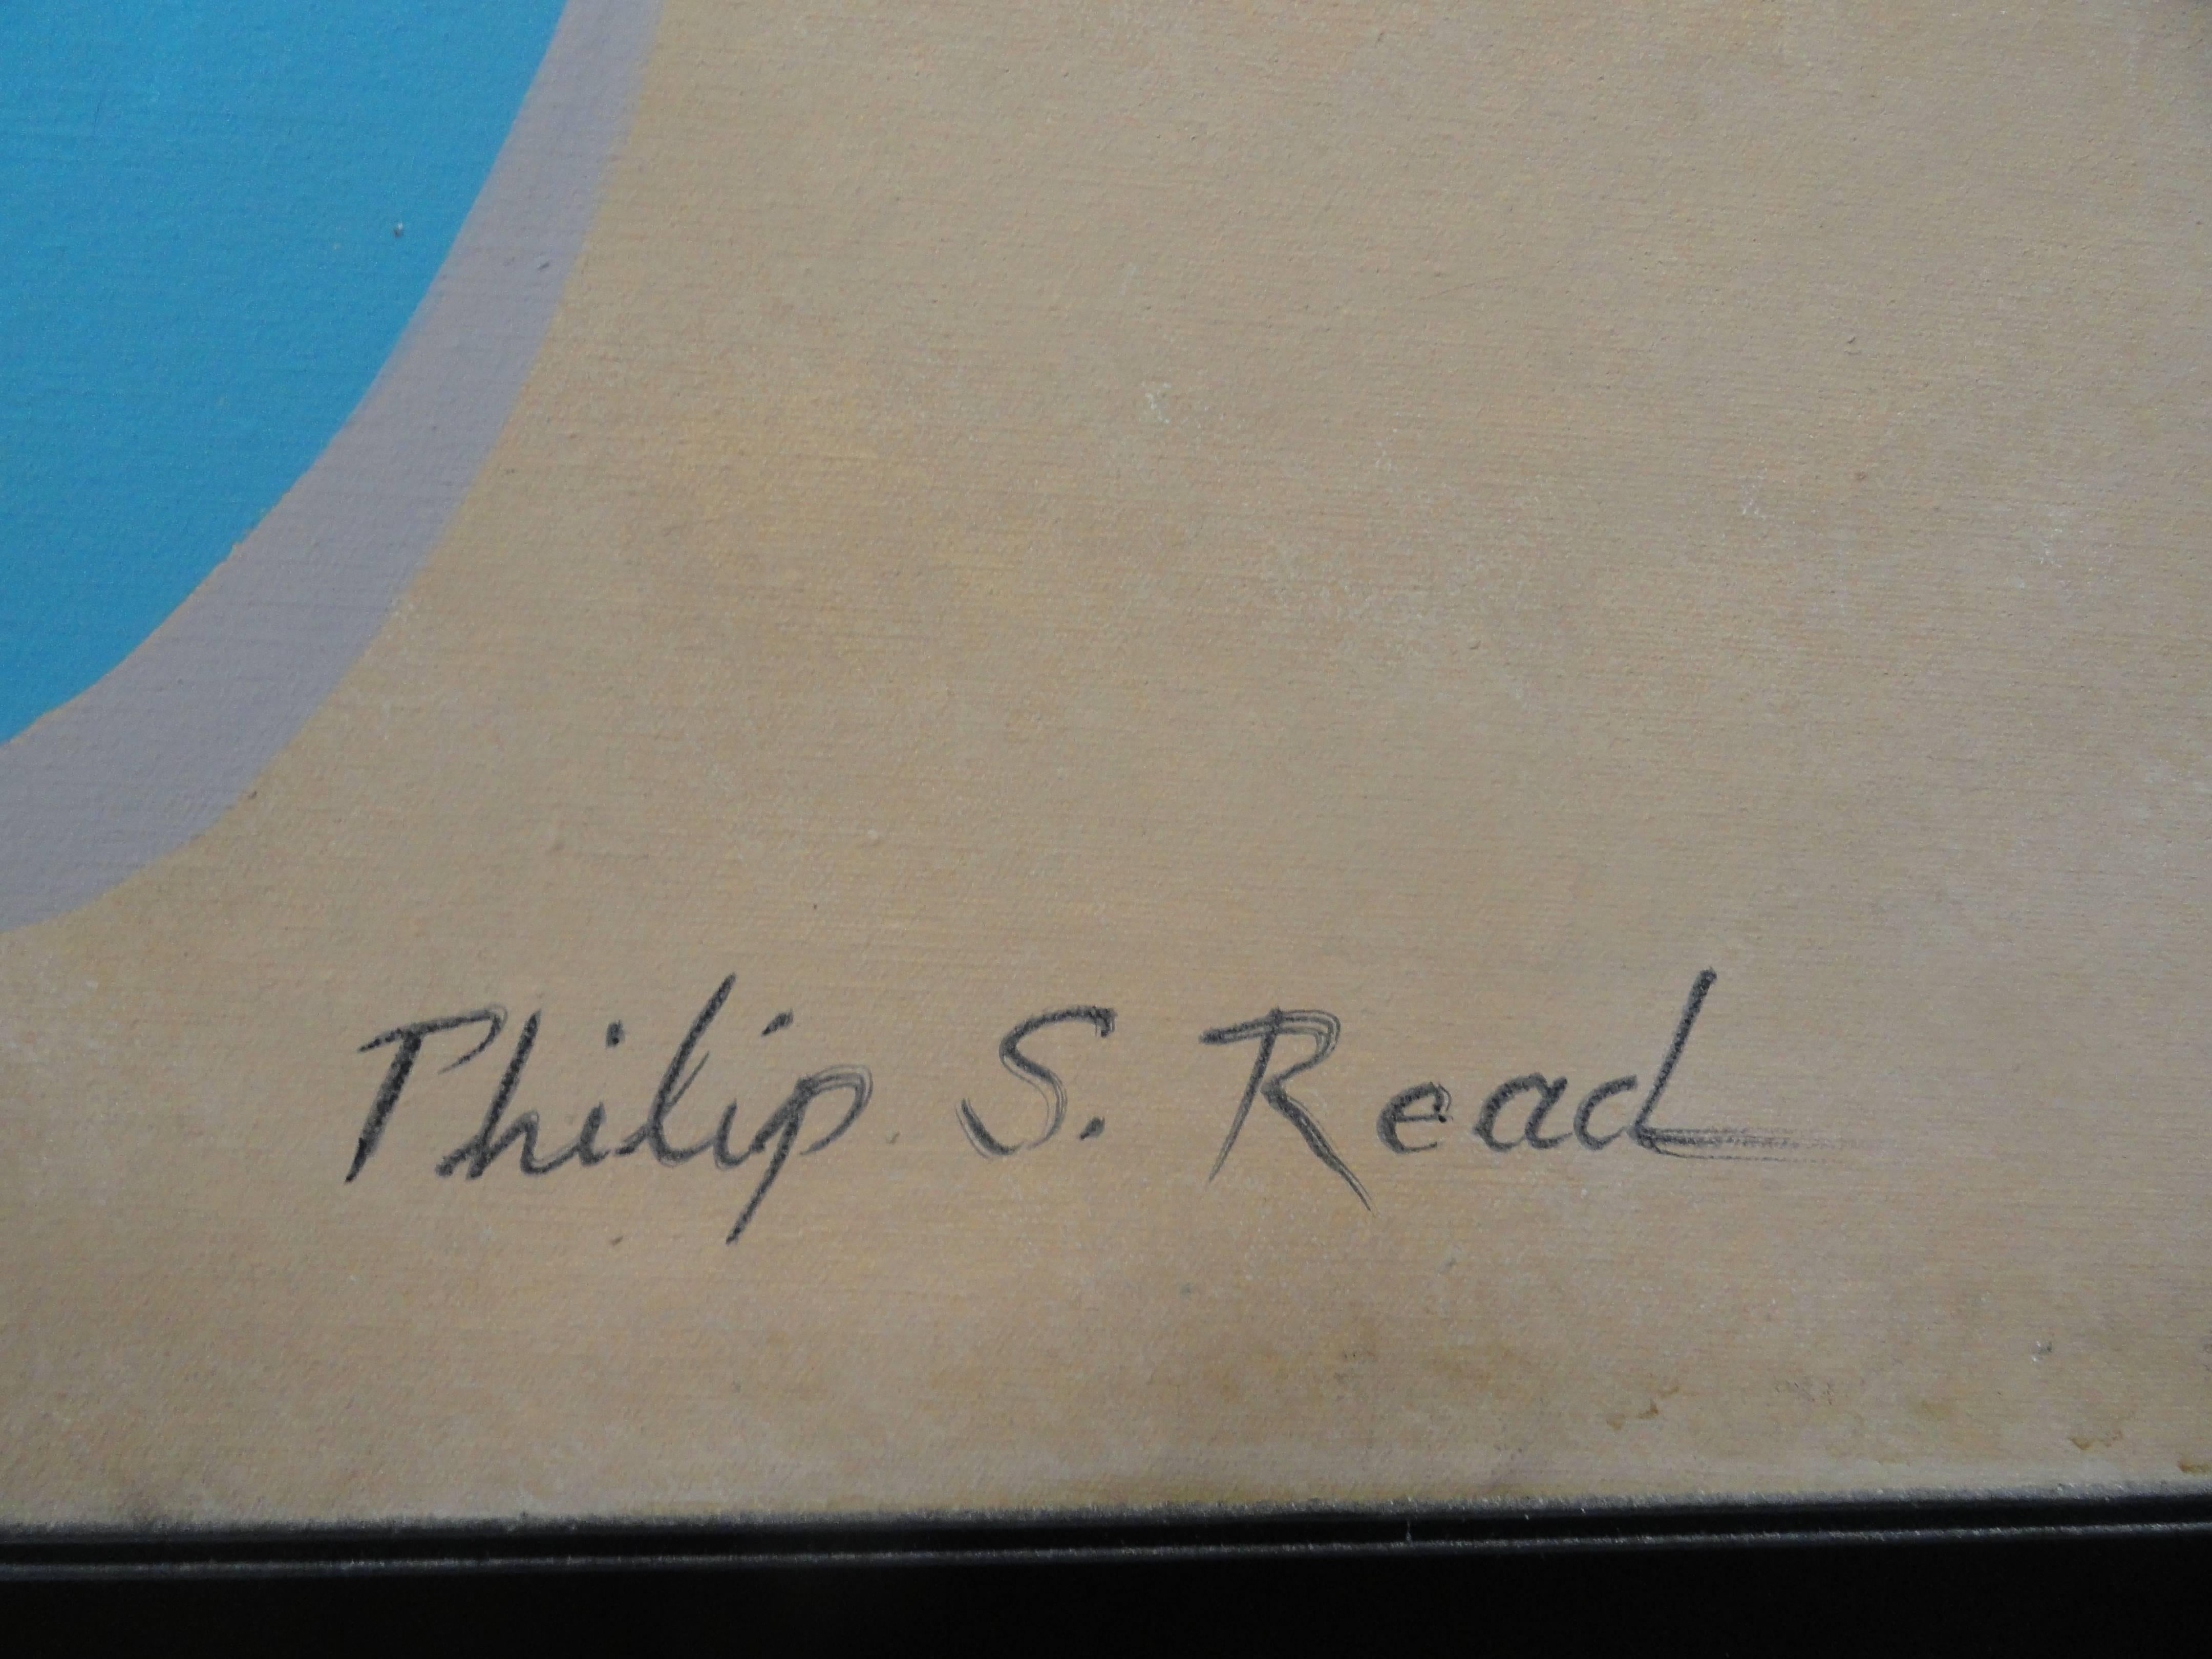 Philip Standish Read Painting 